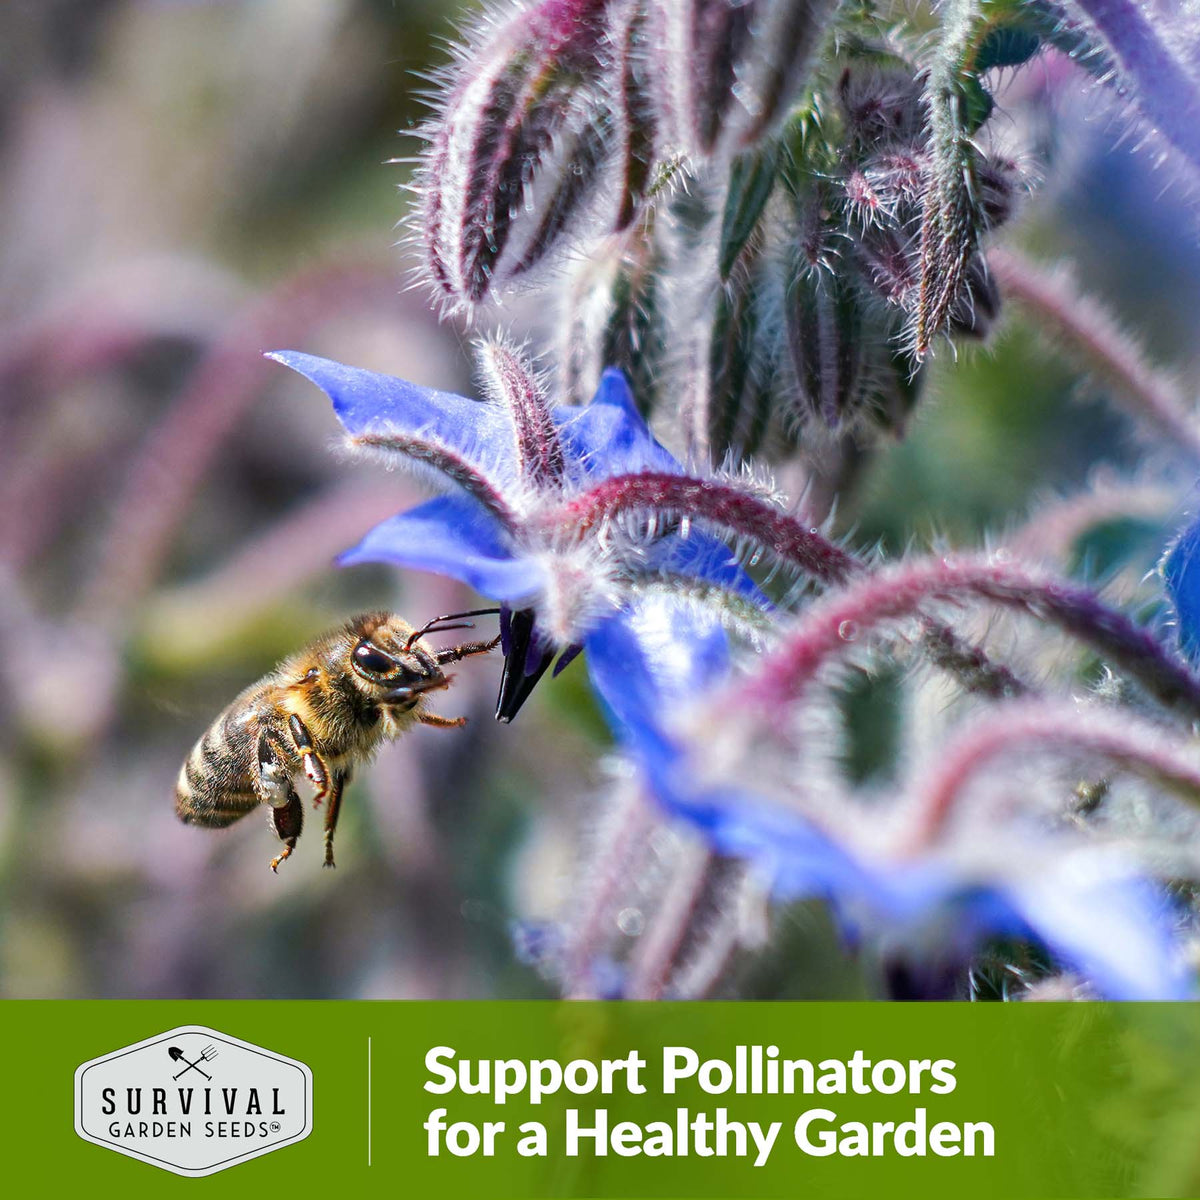 Borage helps support pollinators for a healthy gardern